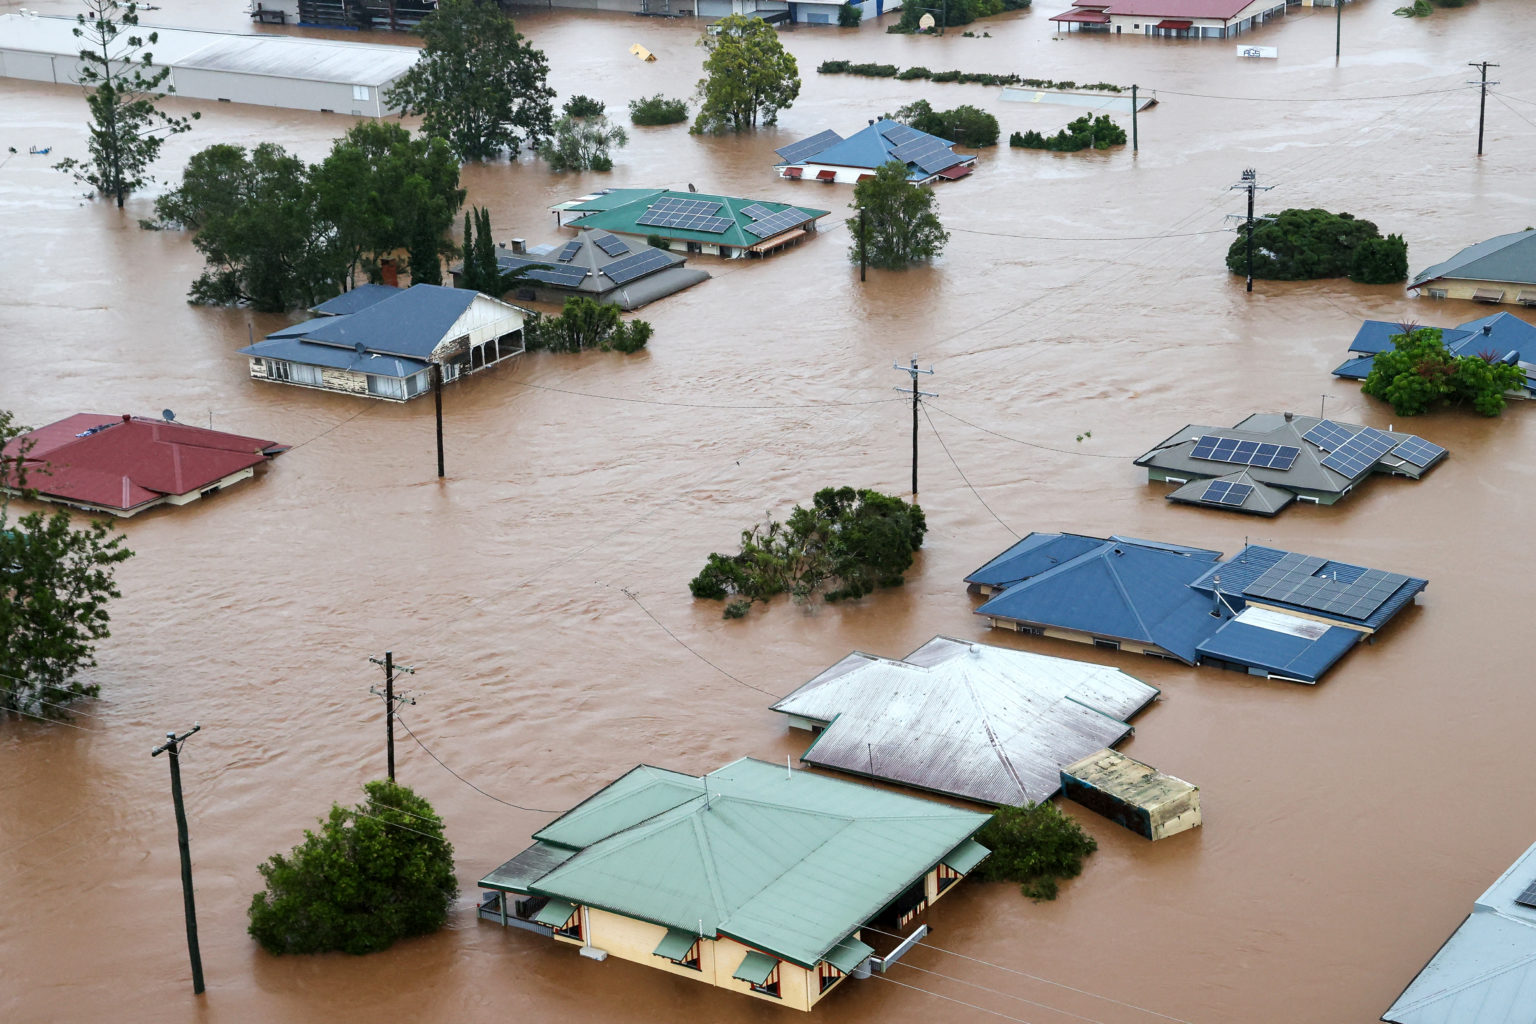 Australians rescued from rooftops as torrential rain ravages rural